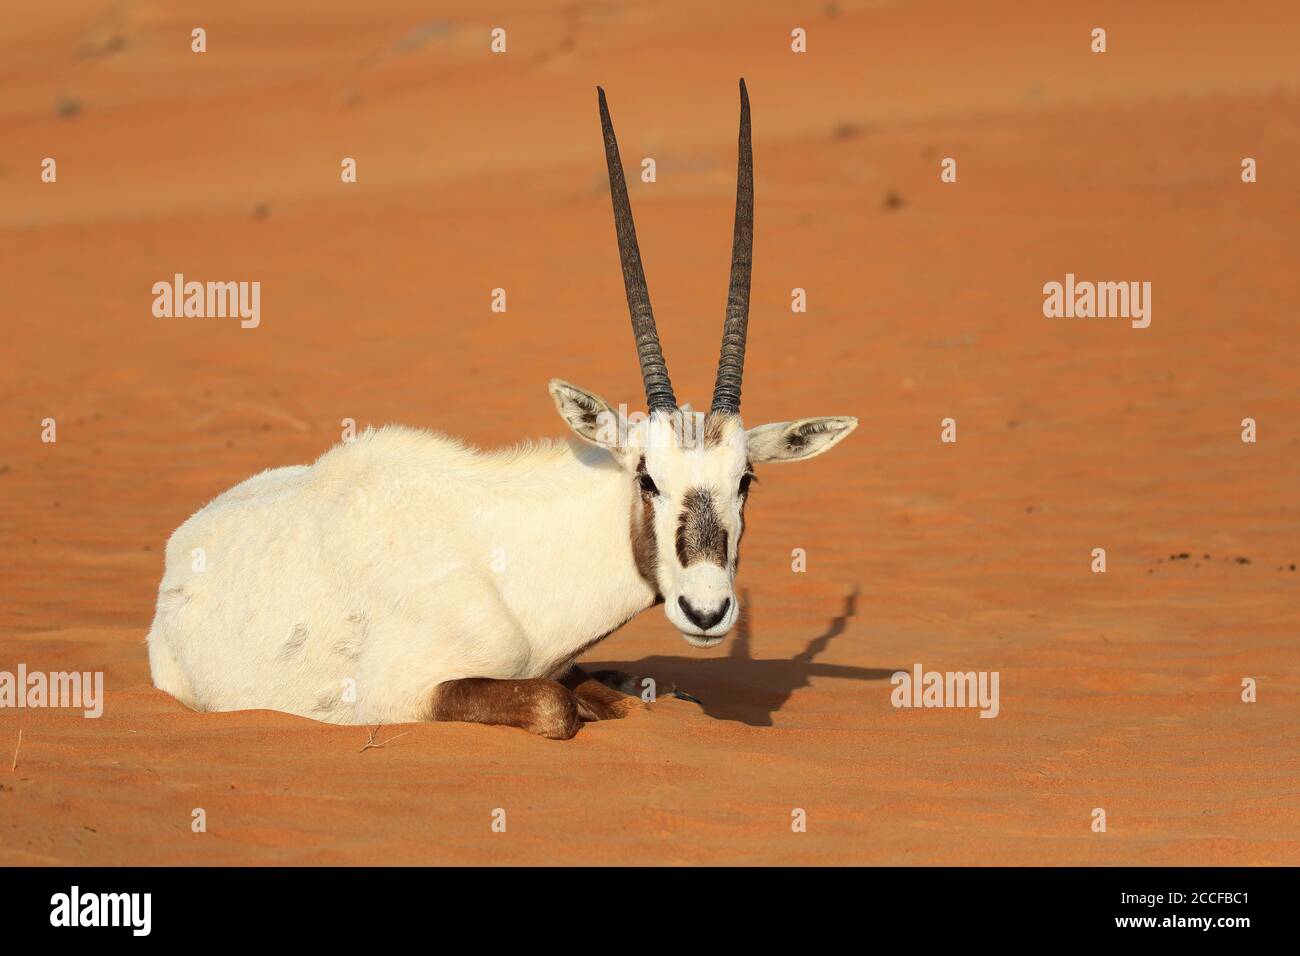 Arabian oryx antelope lies in the sand Stock Photo